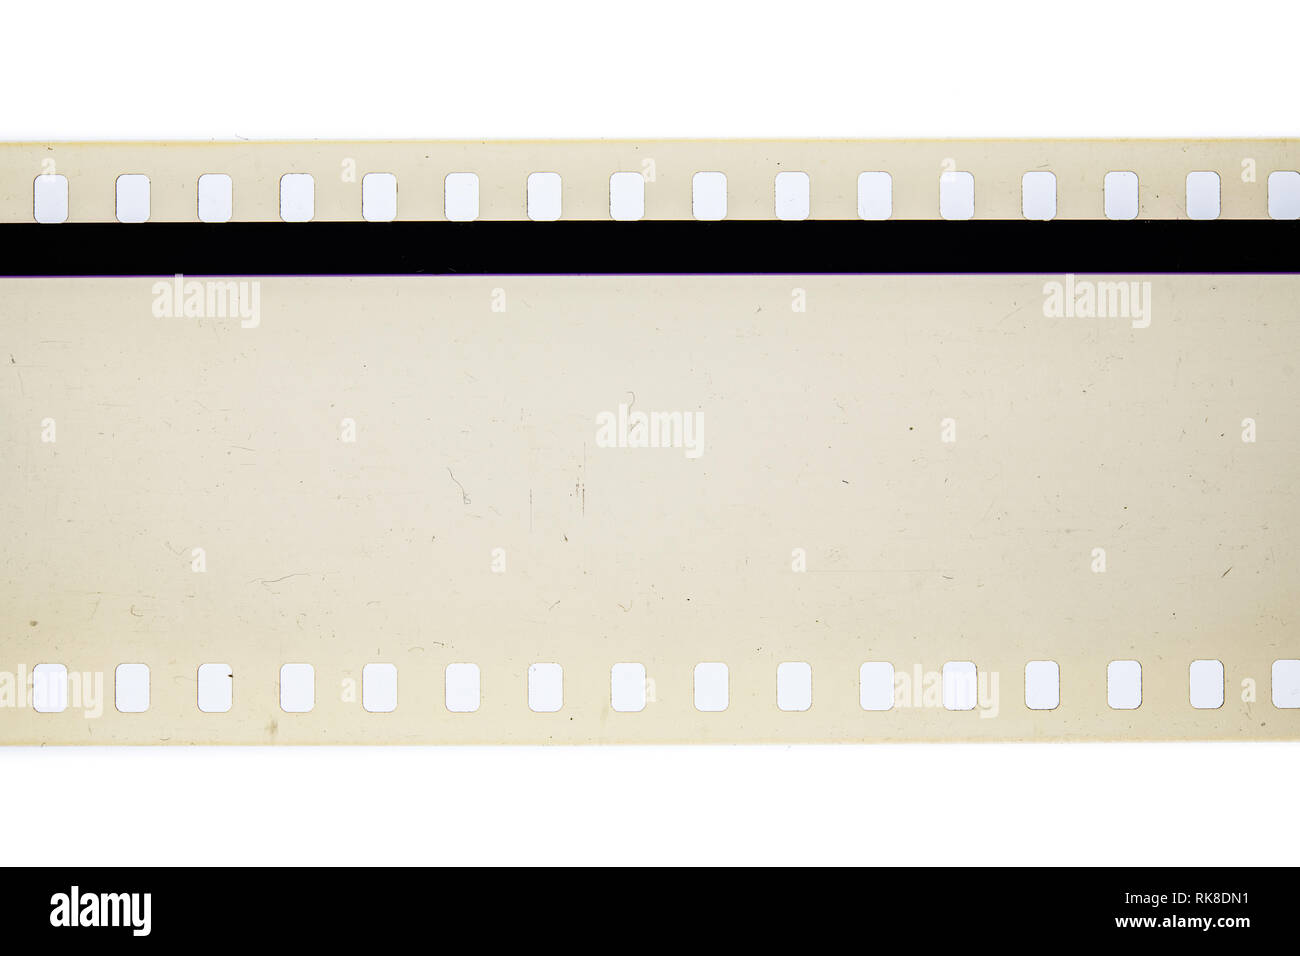 Extreme close up 35mm movie striscia di pellicola vuoto telai trasparenti Foto Stock